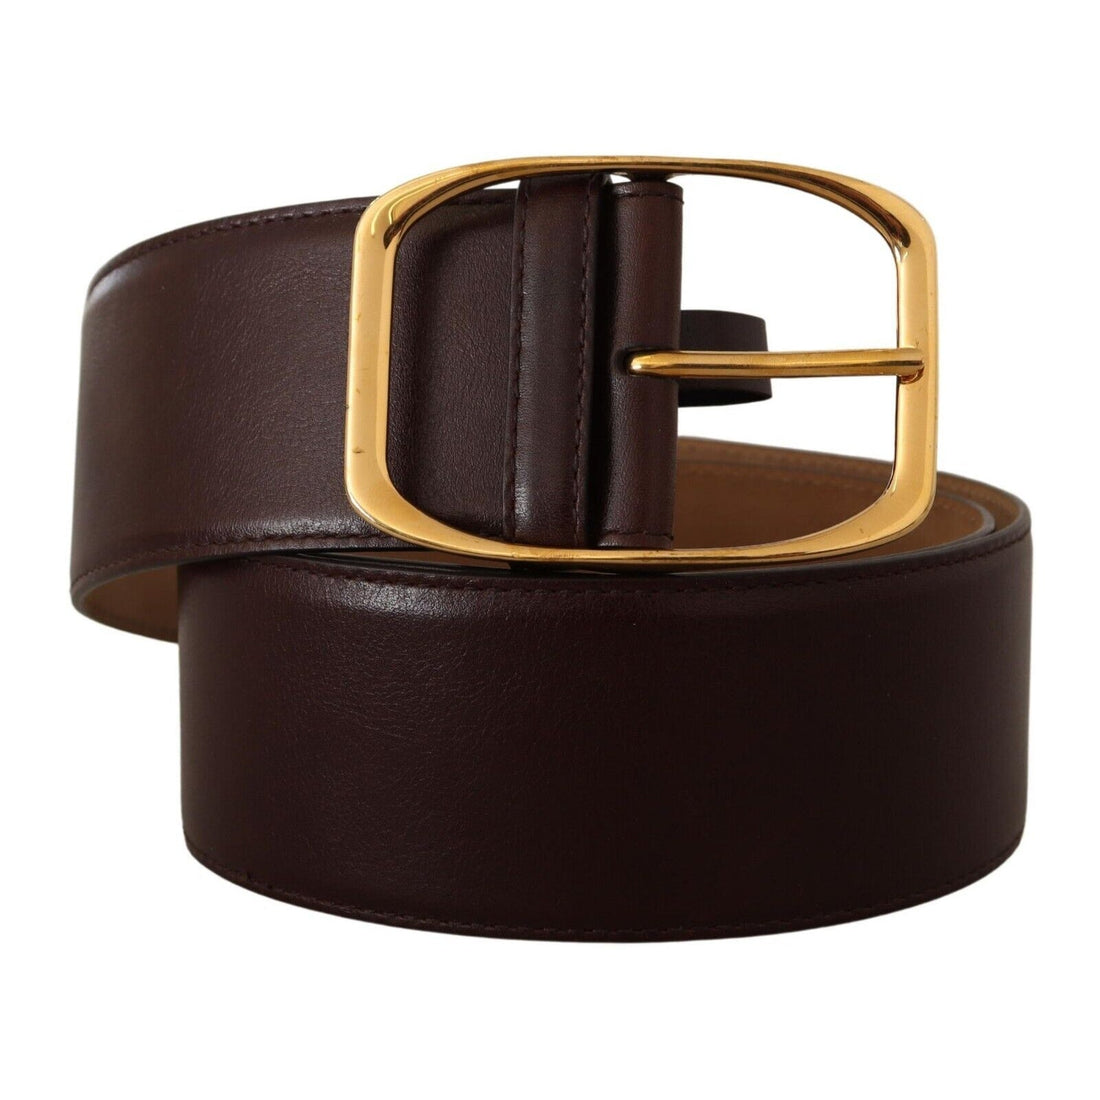 Dolce & Gabbana Elegant Dark Brown Leather Belt with Gold Buckle